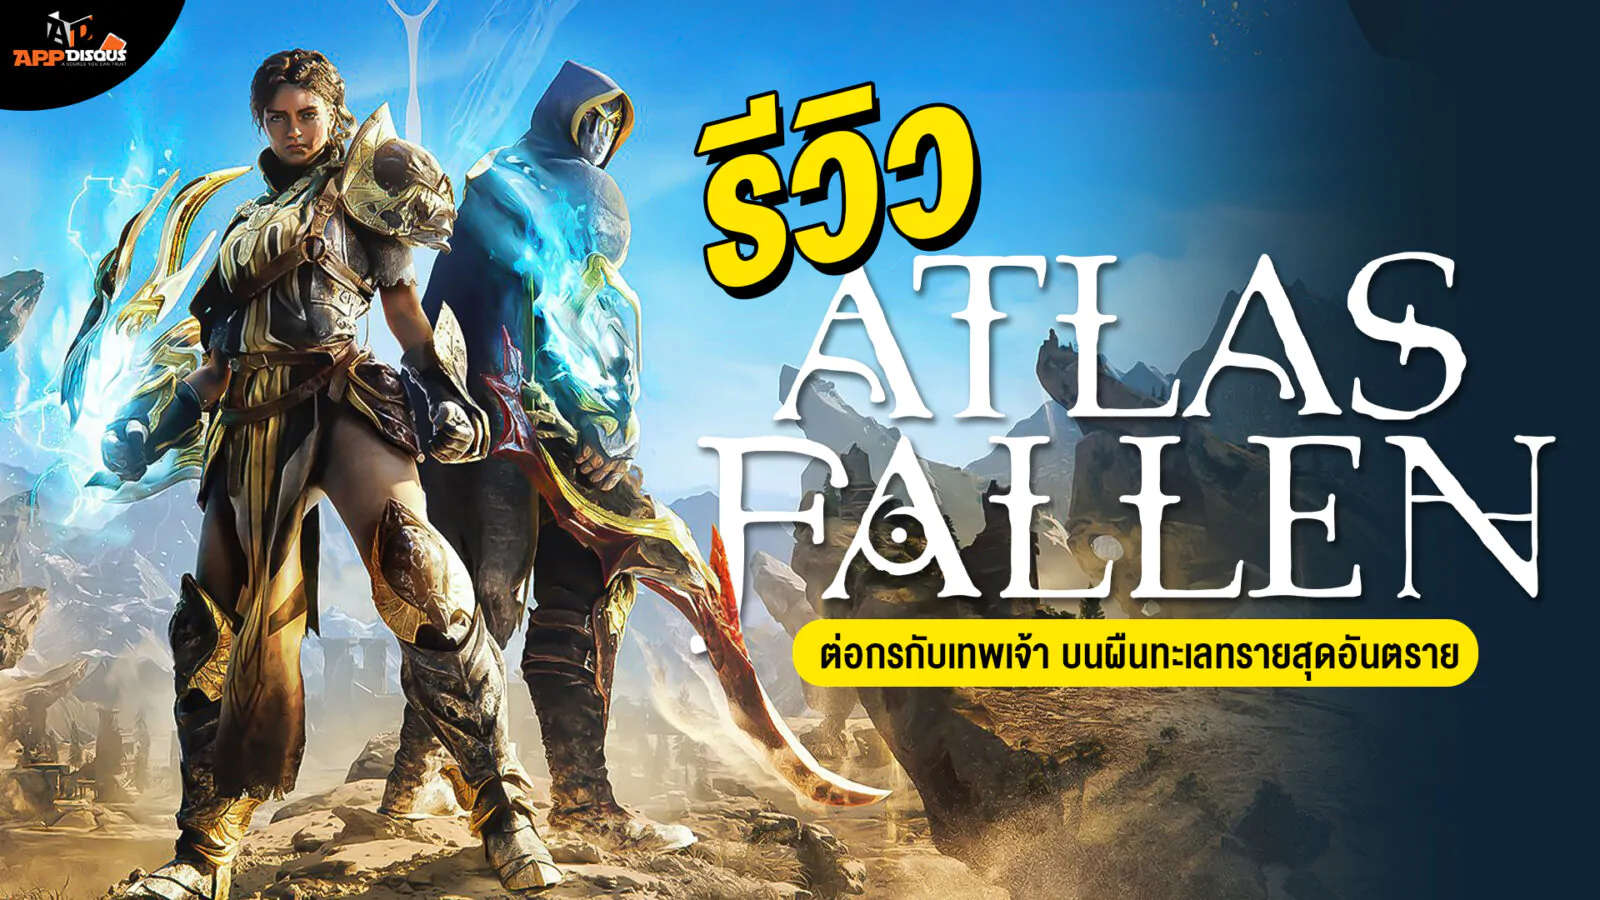 0 1 | Atlas Fallen | รีวิว Atlas Fallen ต่อกรกับเทพเจ้า บนผืนทะเลทรายสุดอันตราย (PlayStation 5)